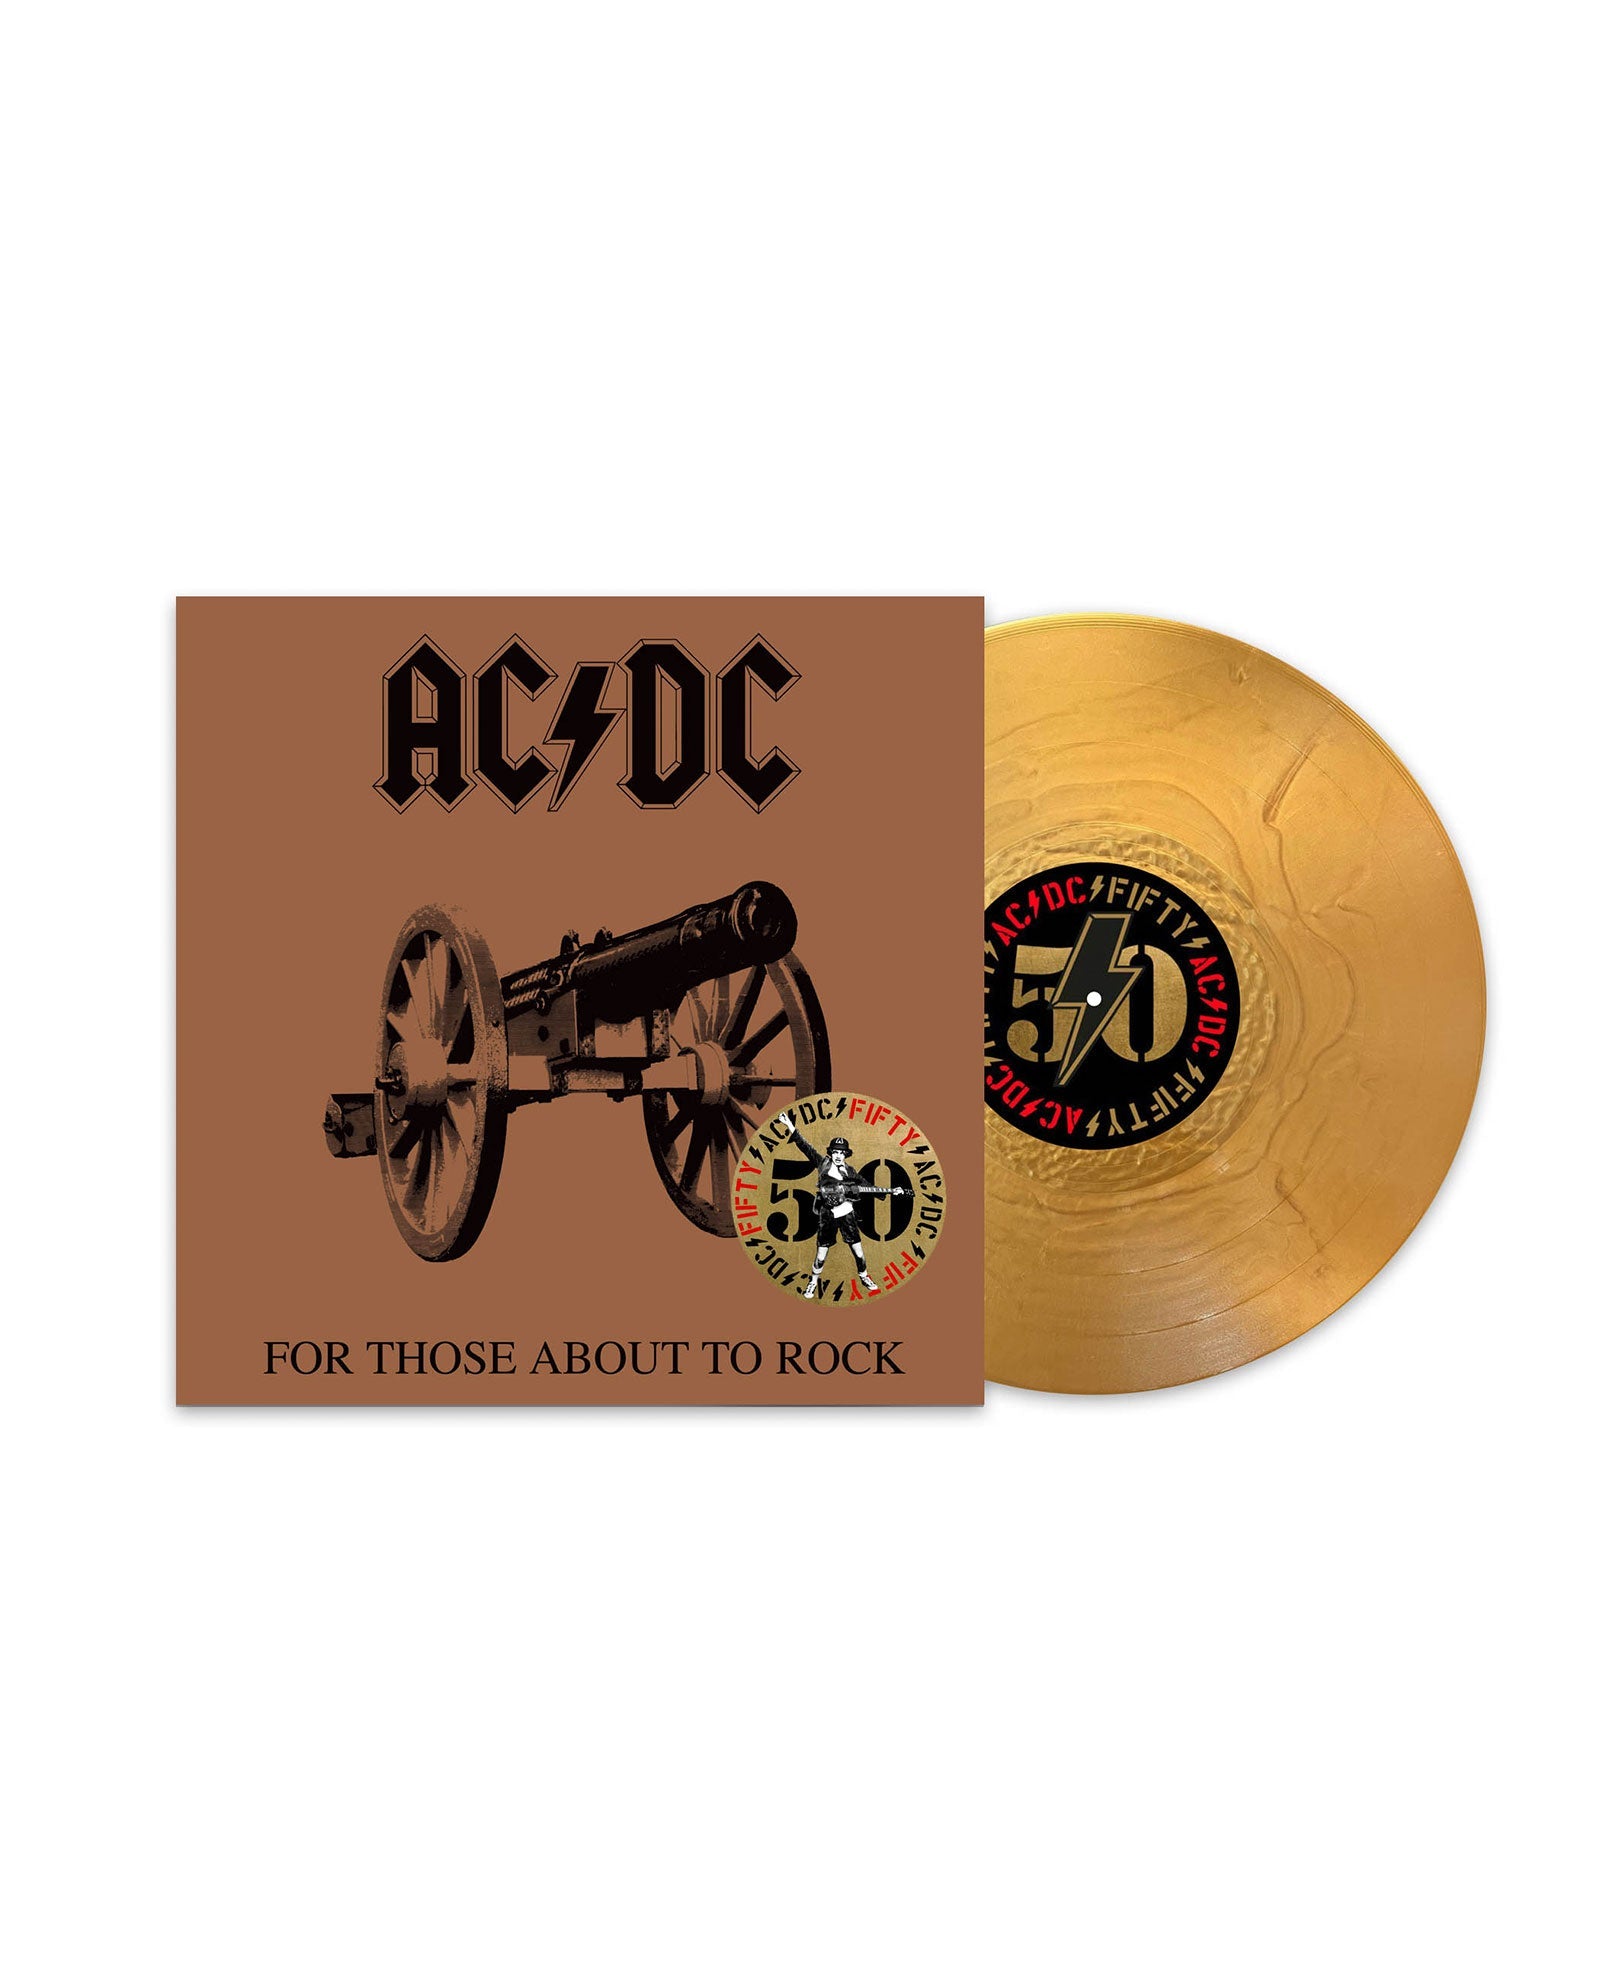 AC/DC - LP Vinilo Dorado "For Those About To Rock (We Salute You)" Ed. 50 aniversario - D2fy · Rocktud - Rocktud